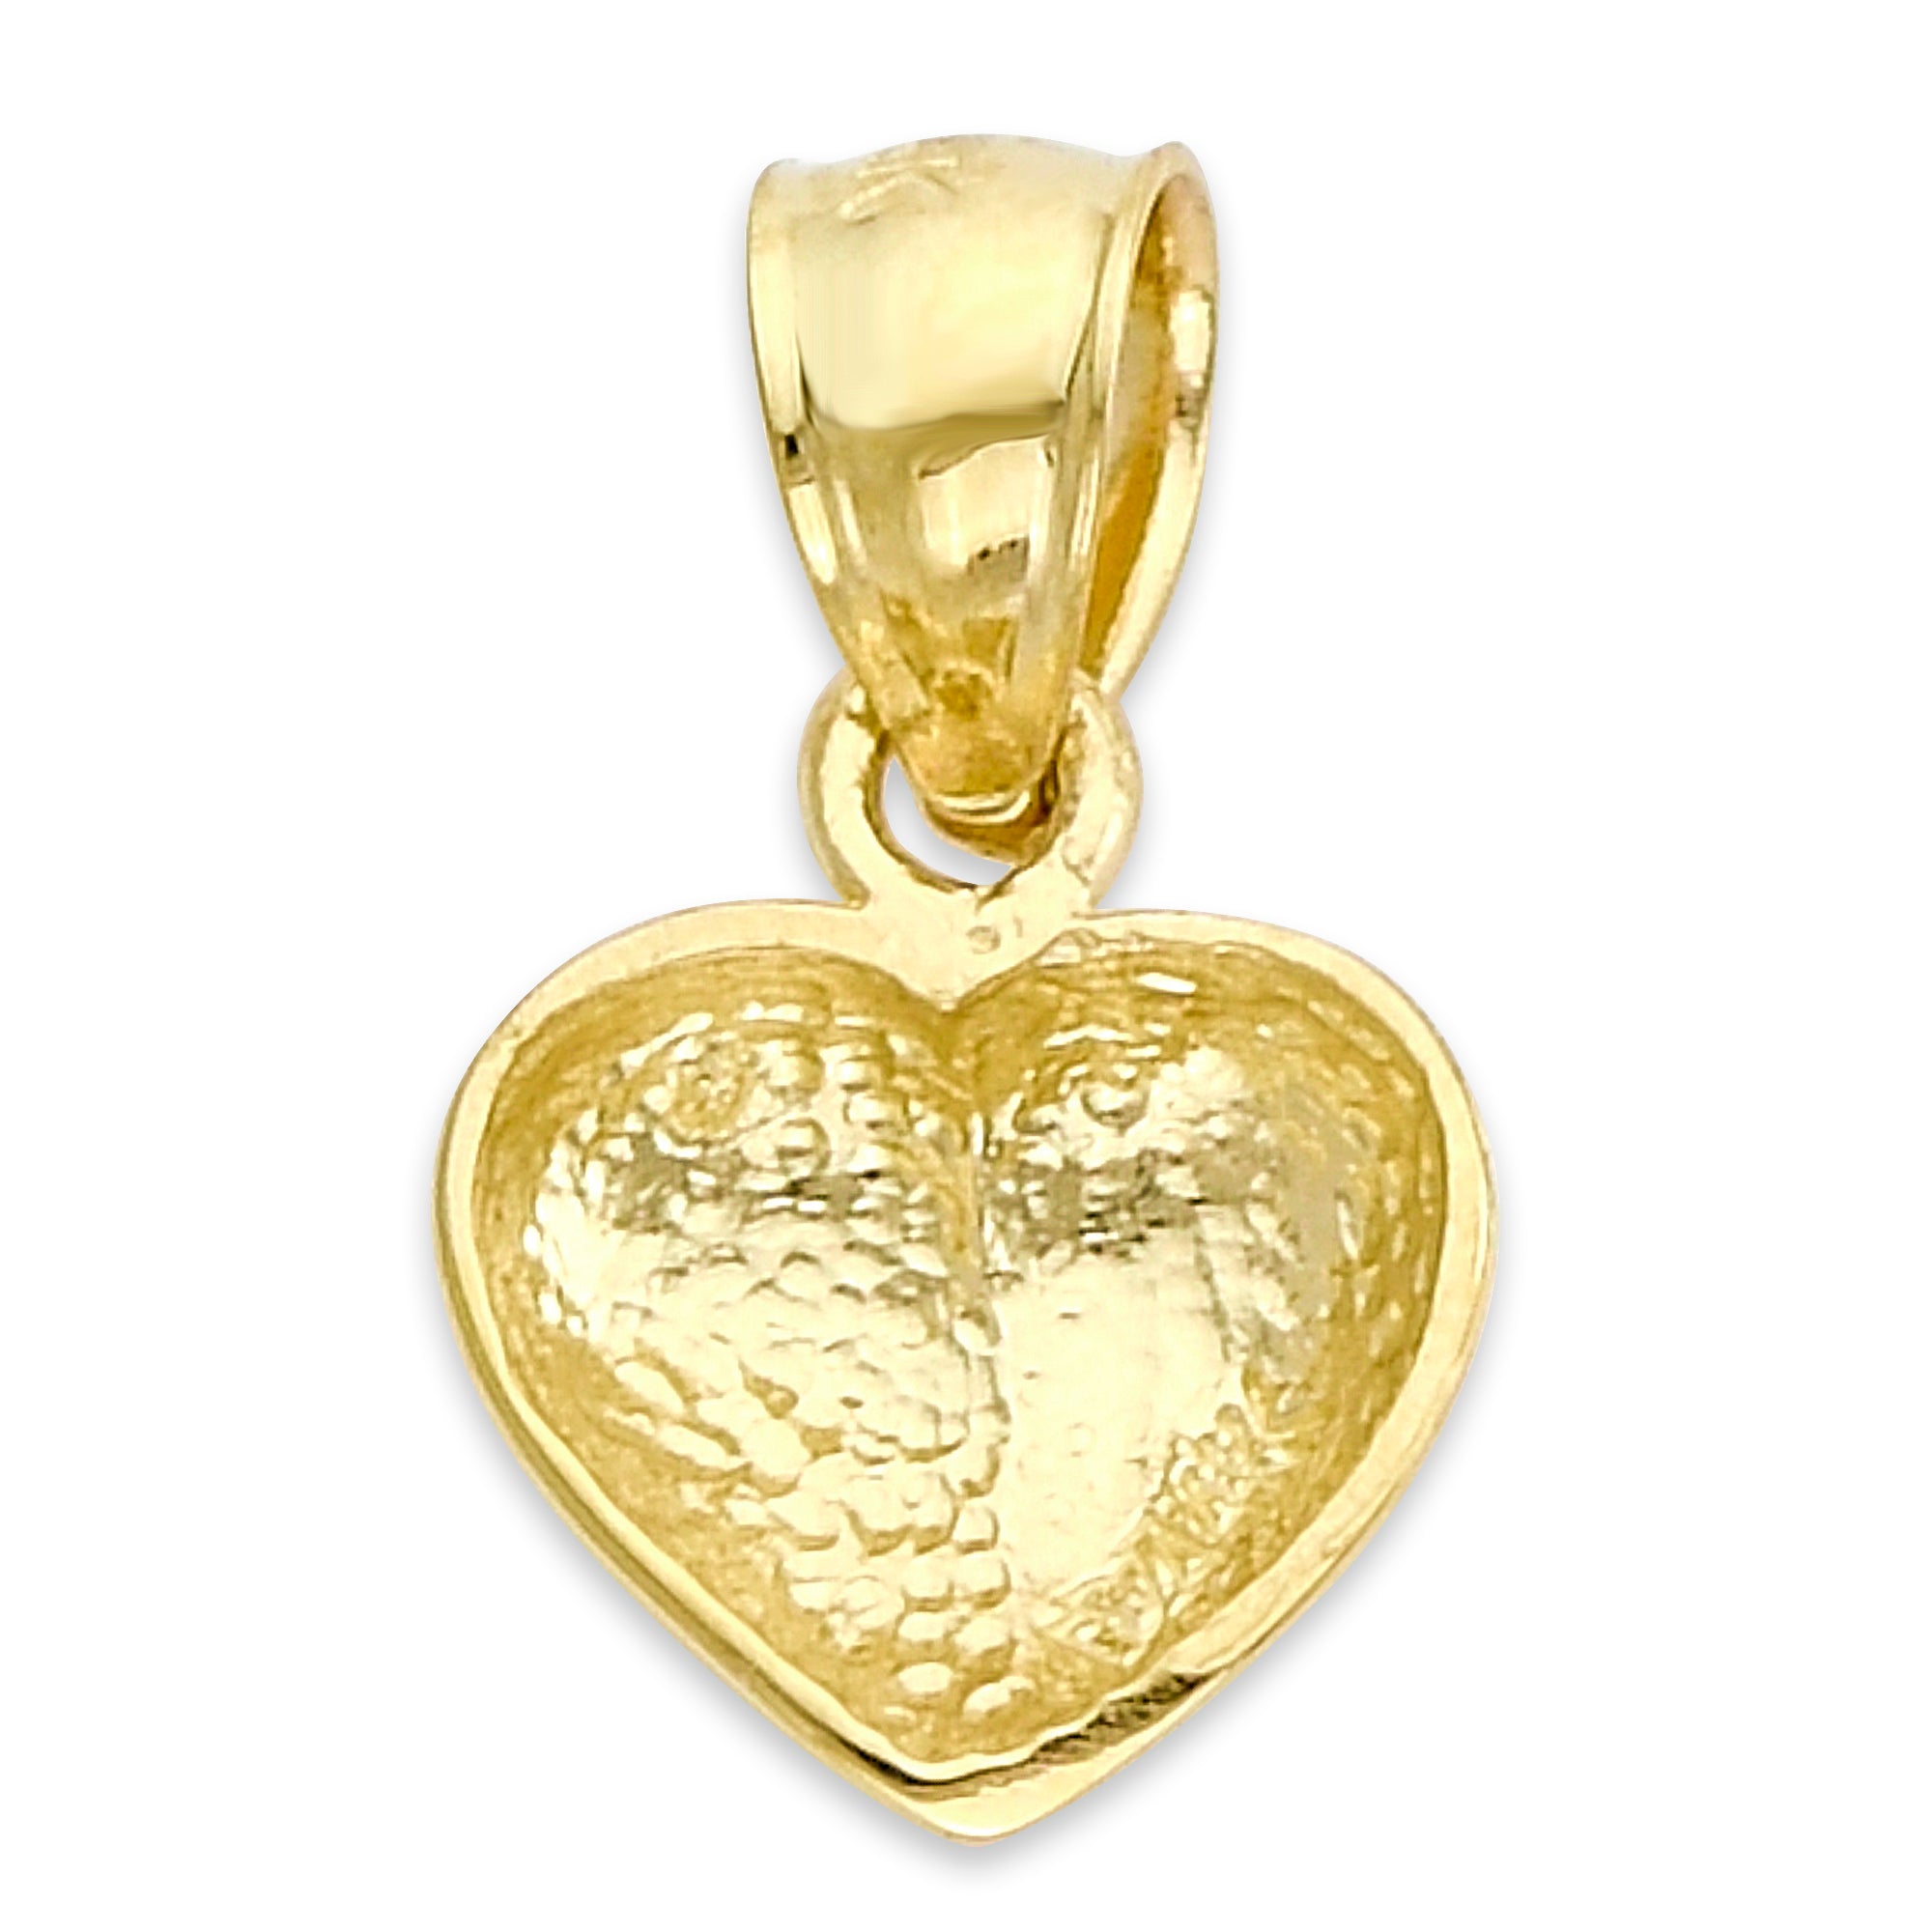 Solid Gold Heart Pendant - 10k or 14k